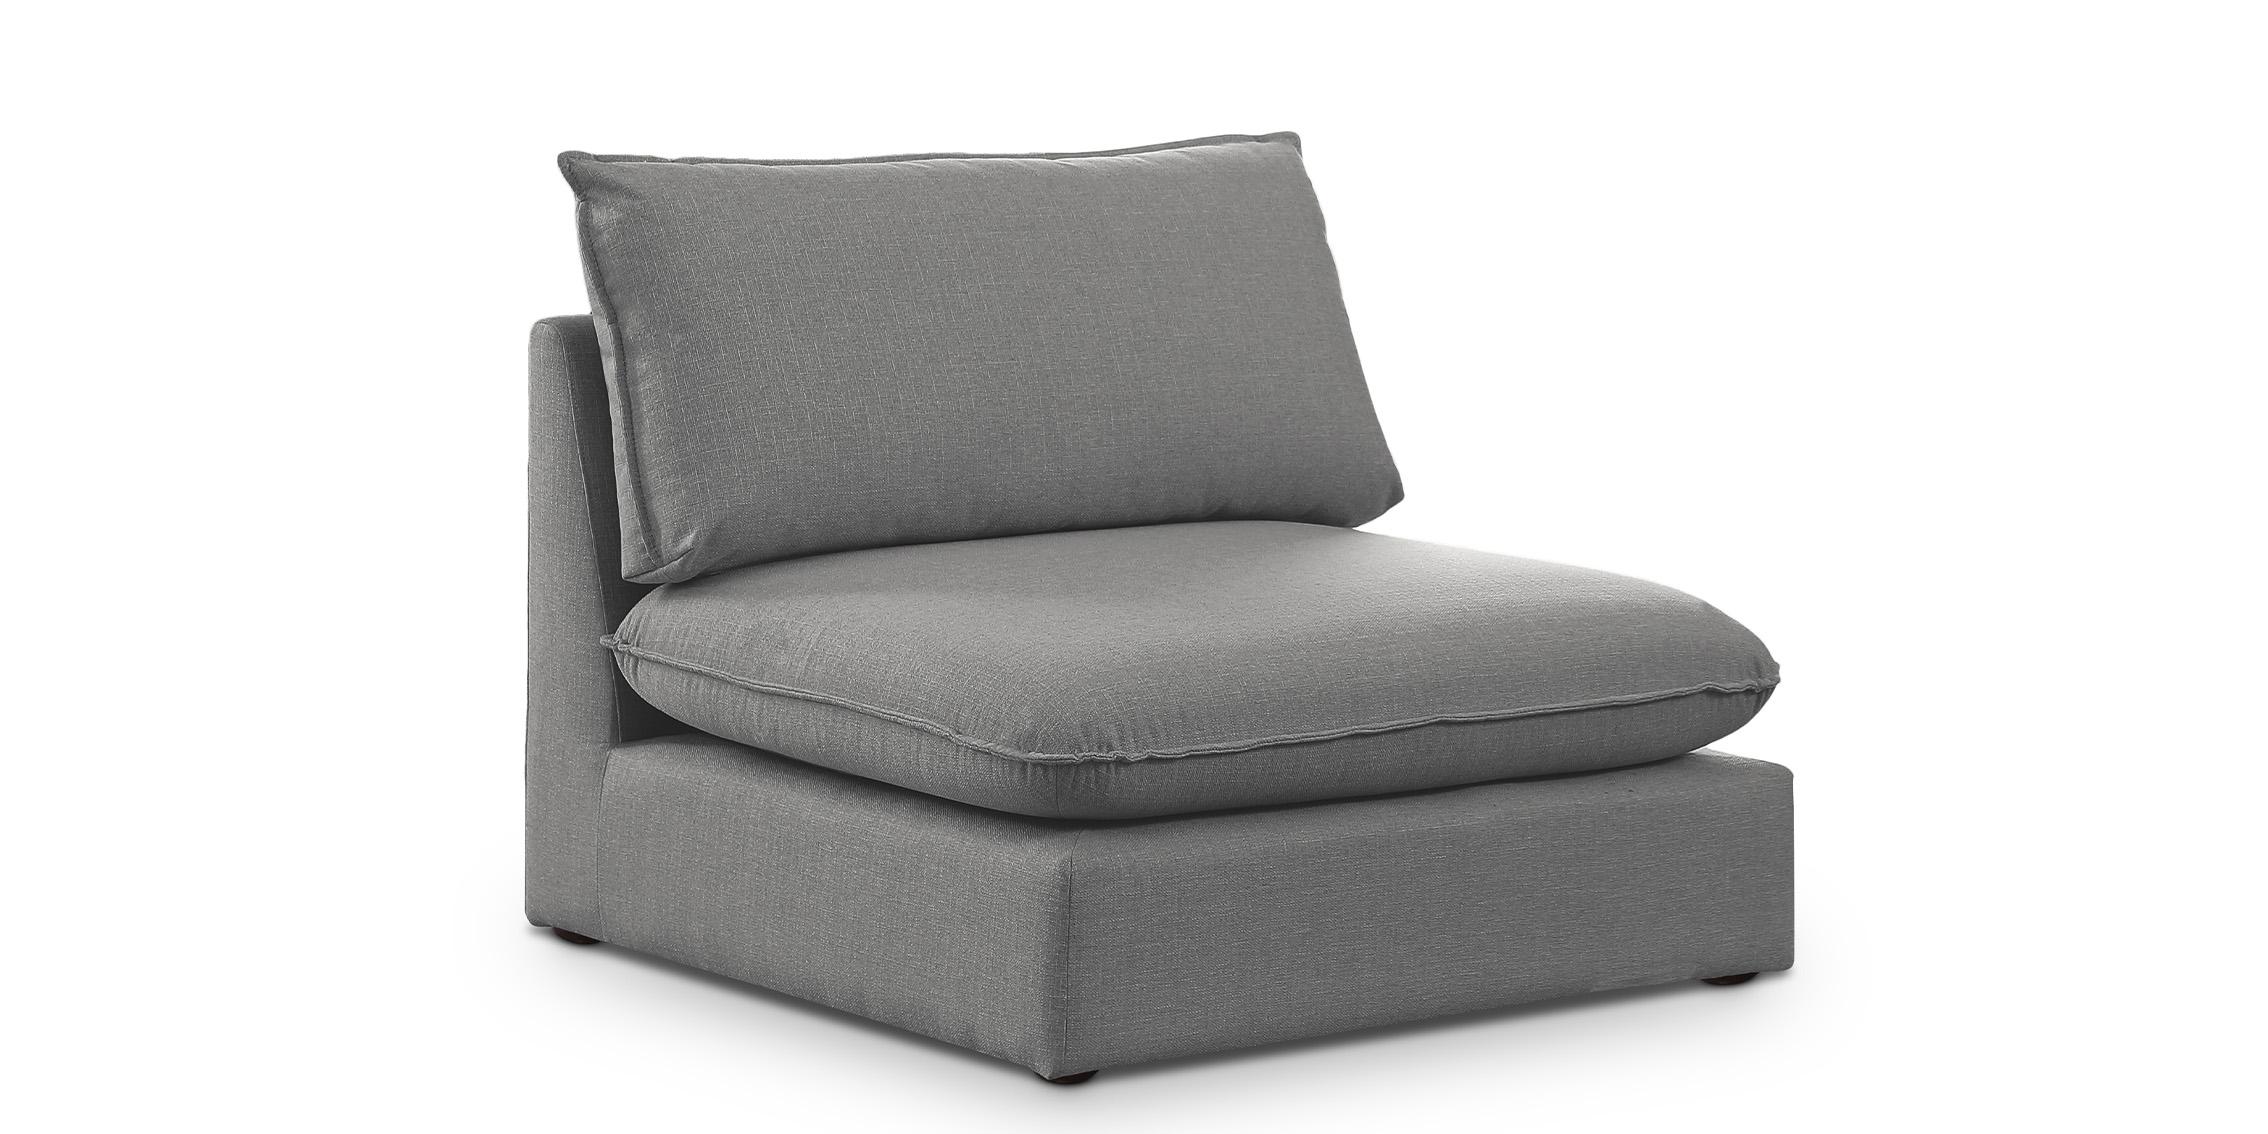 Contemporary, Modern Armless Chair MACKENZIE 688Grey-Armless 688Grey-Armless in Gray Linen